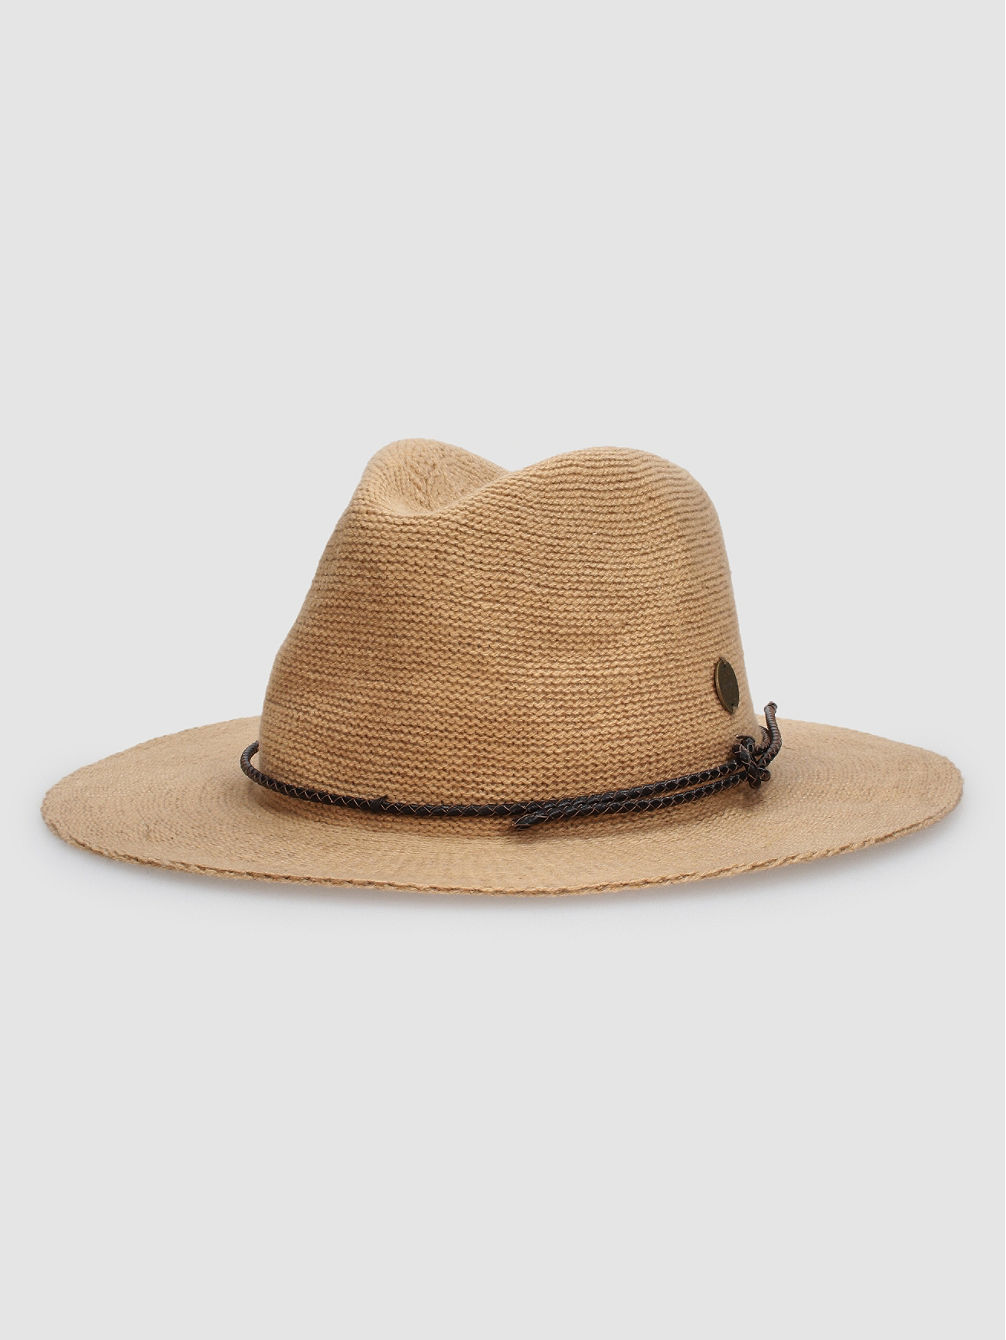 Spice Temple Knit Panama Hatt